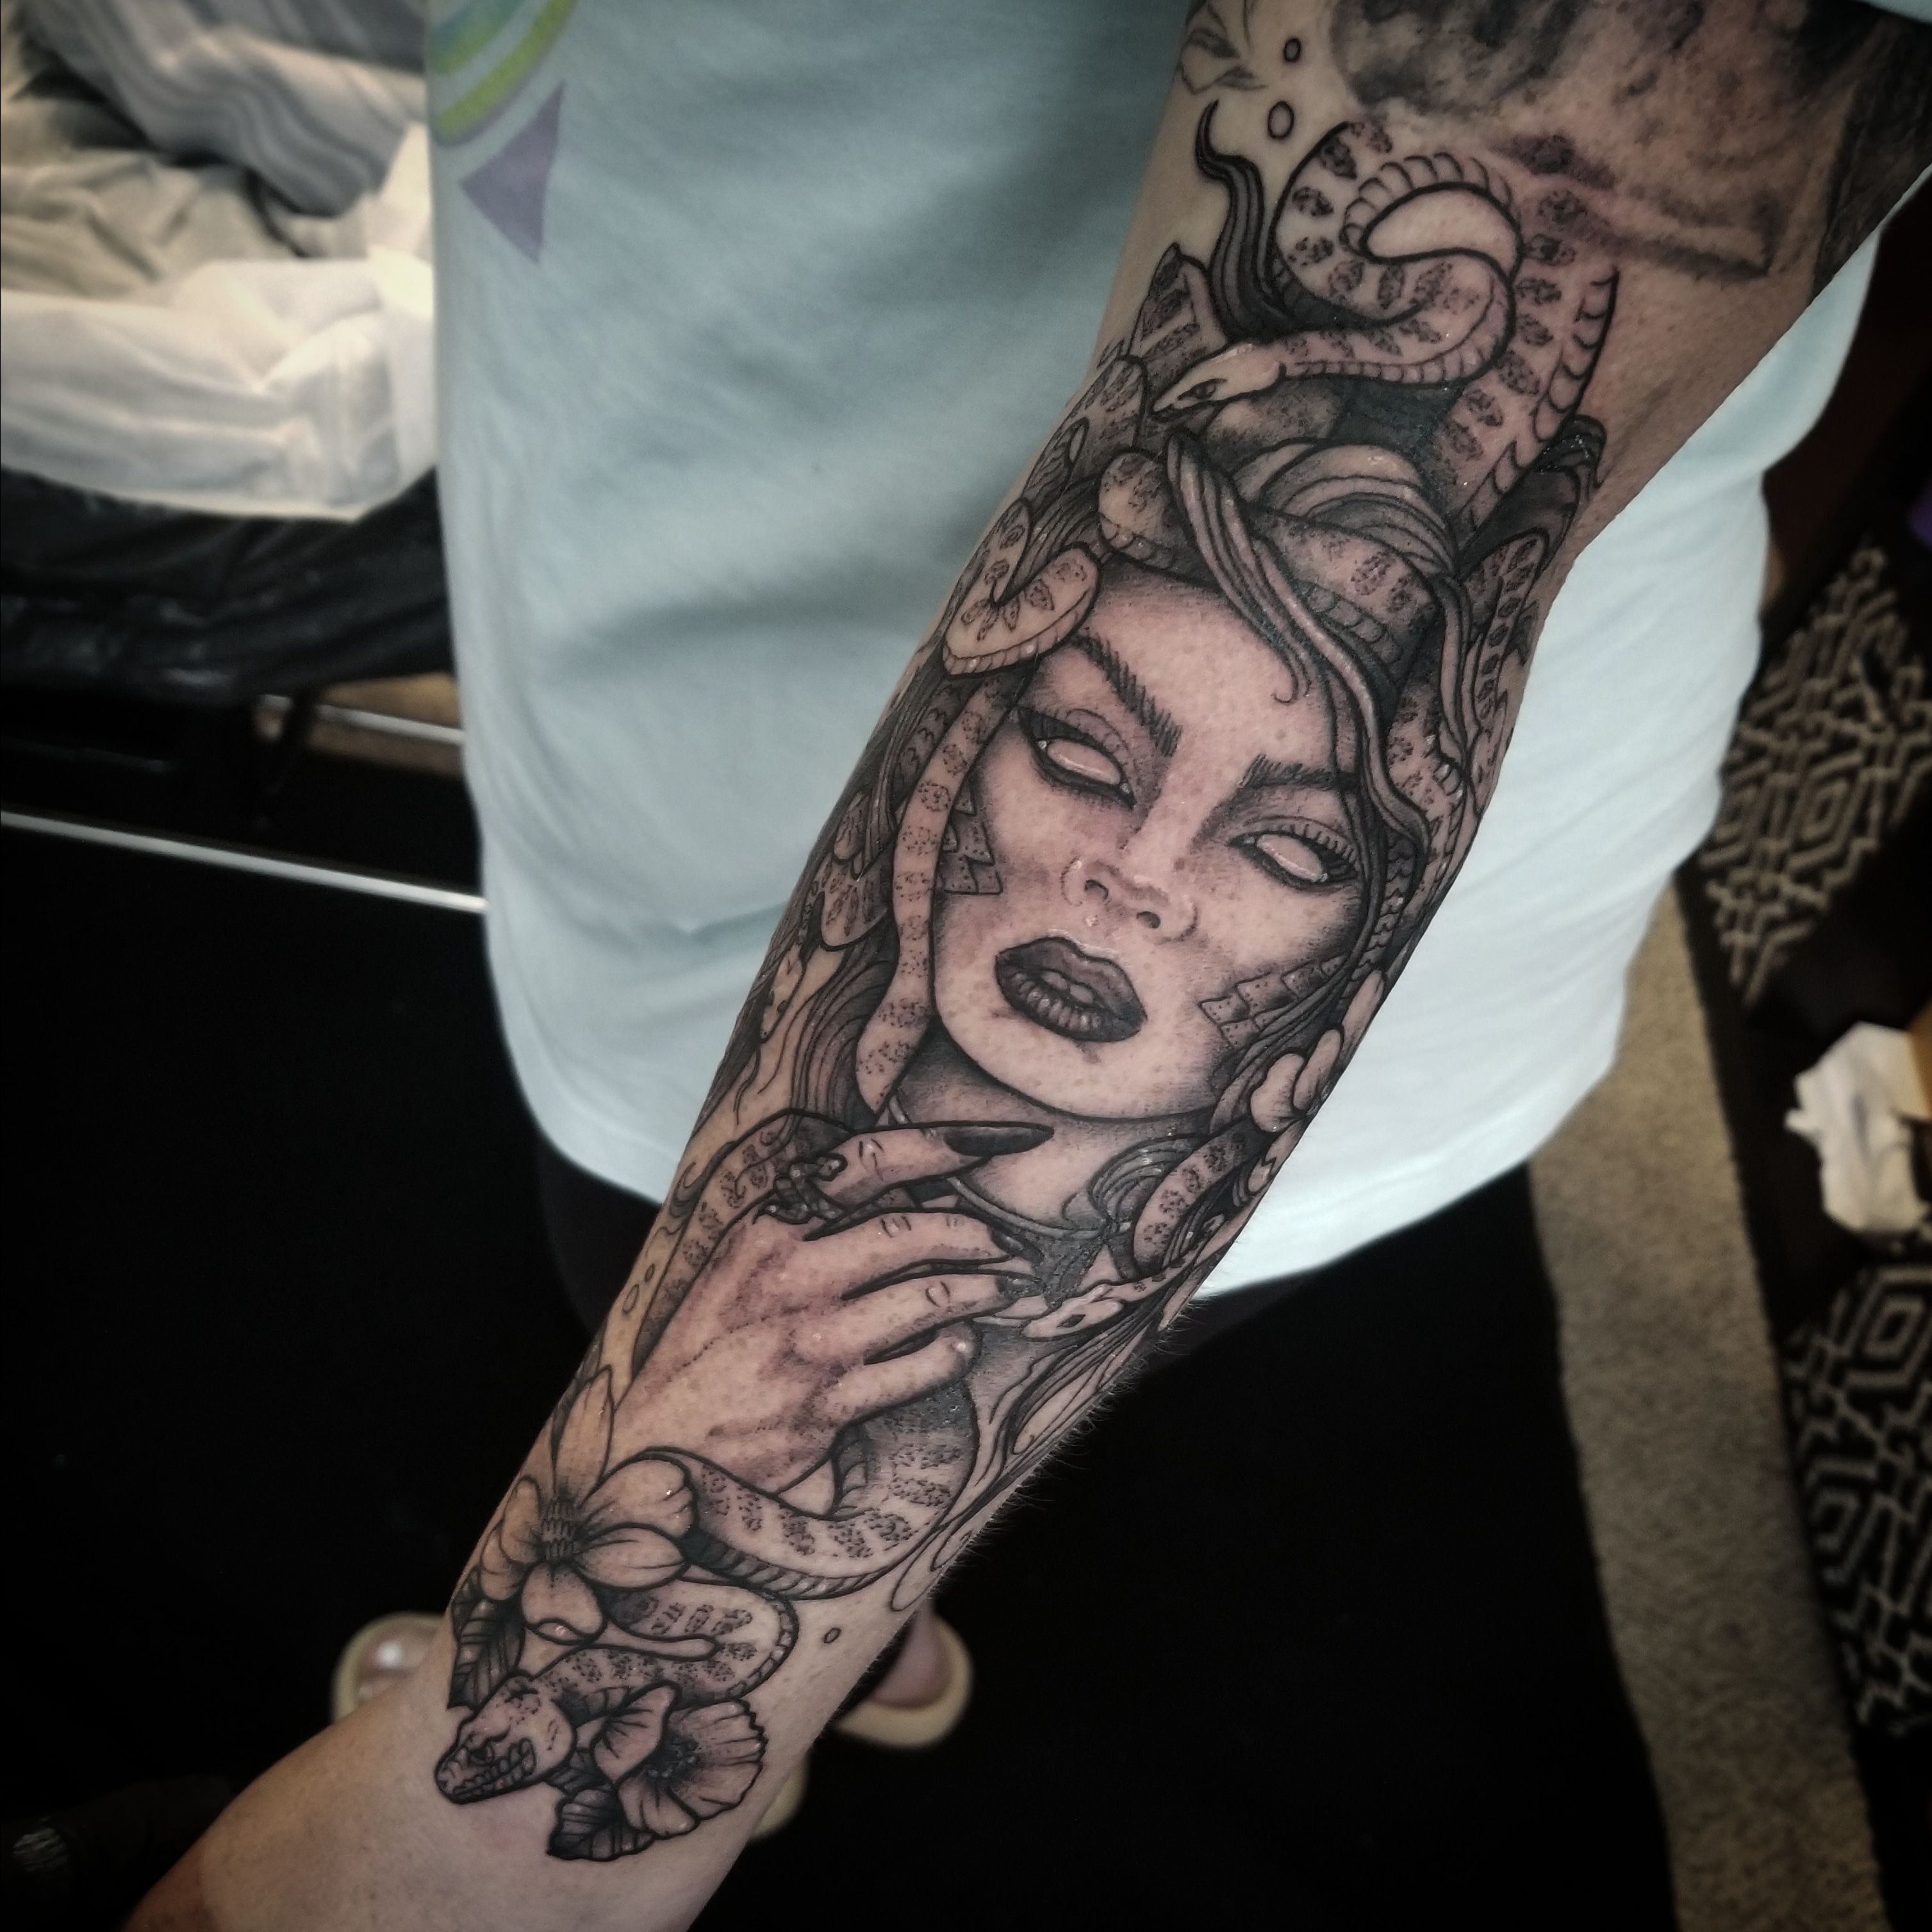 Medusa done by me sloanpurple at Eel ink Tattoo studio Porto heli  Greece  rtattoo